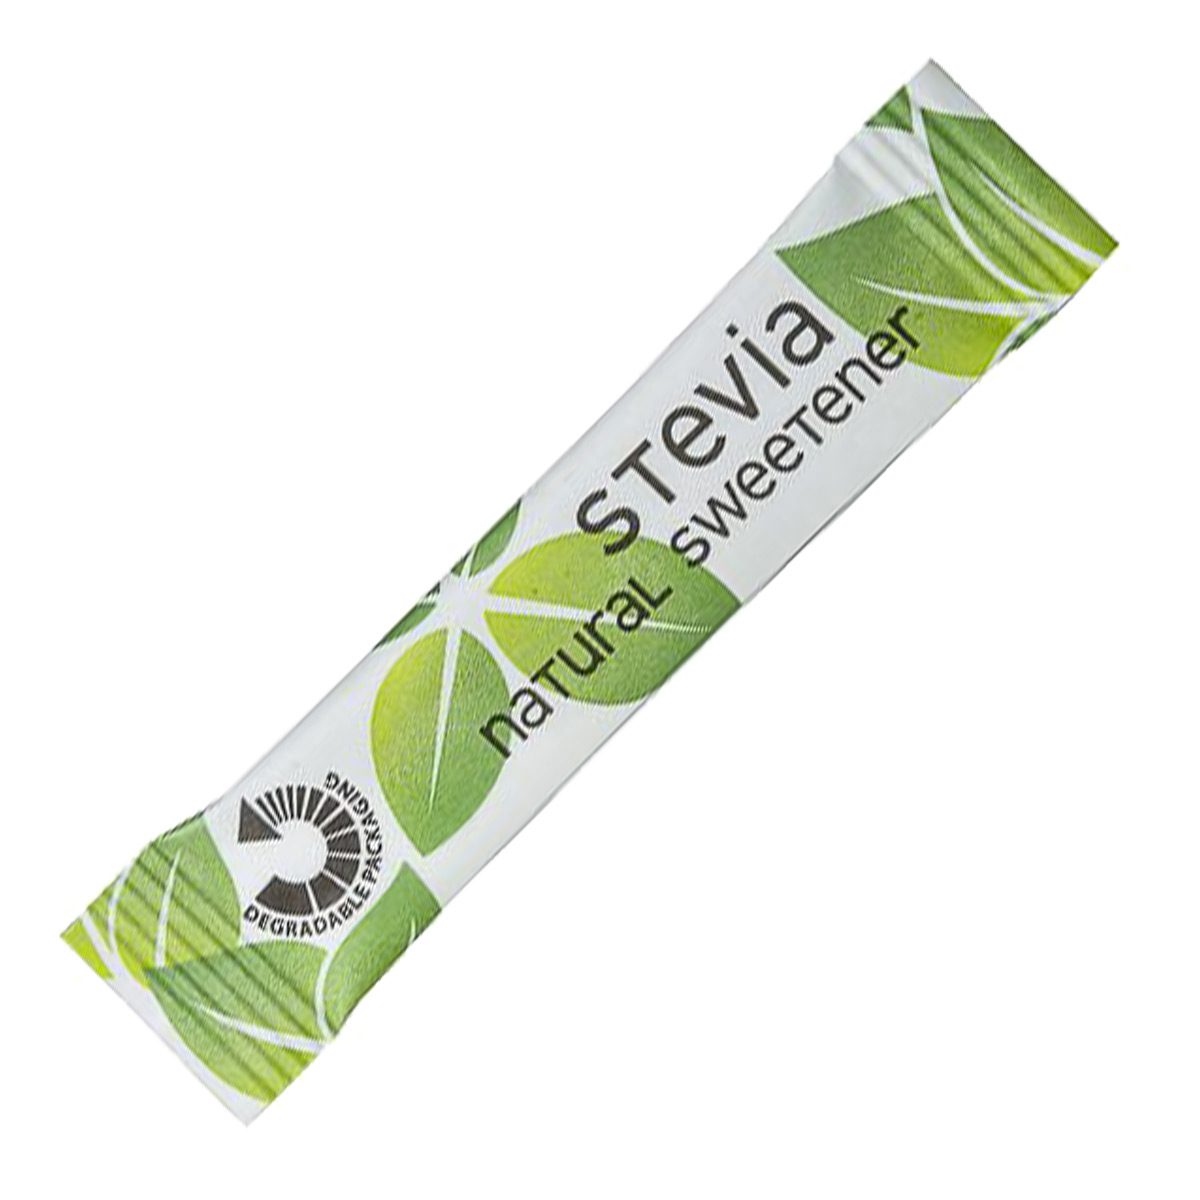 consumables-hospitality-beverage-food-stevia-natural-sweetener-stick-x500s-vjs-natural-plant-based-sweetener-fantastic-taste-degradable-packaging-film-breaks-down-faster-vjs-distributors-HPAS3